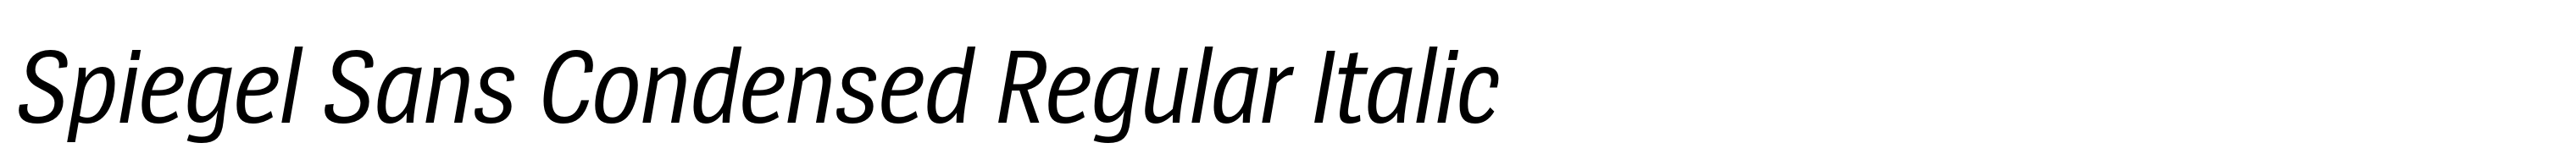 Spiegel Sans Condensed Regular Italic